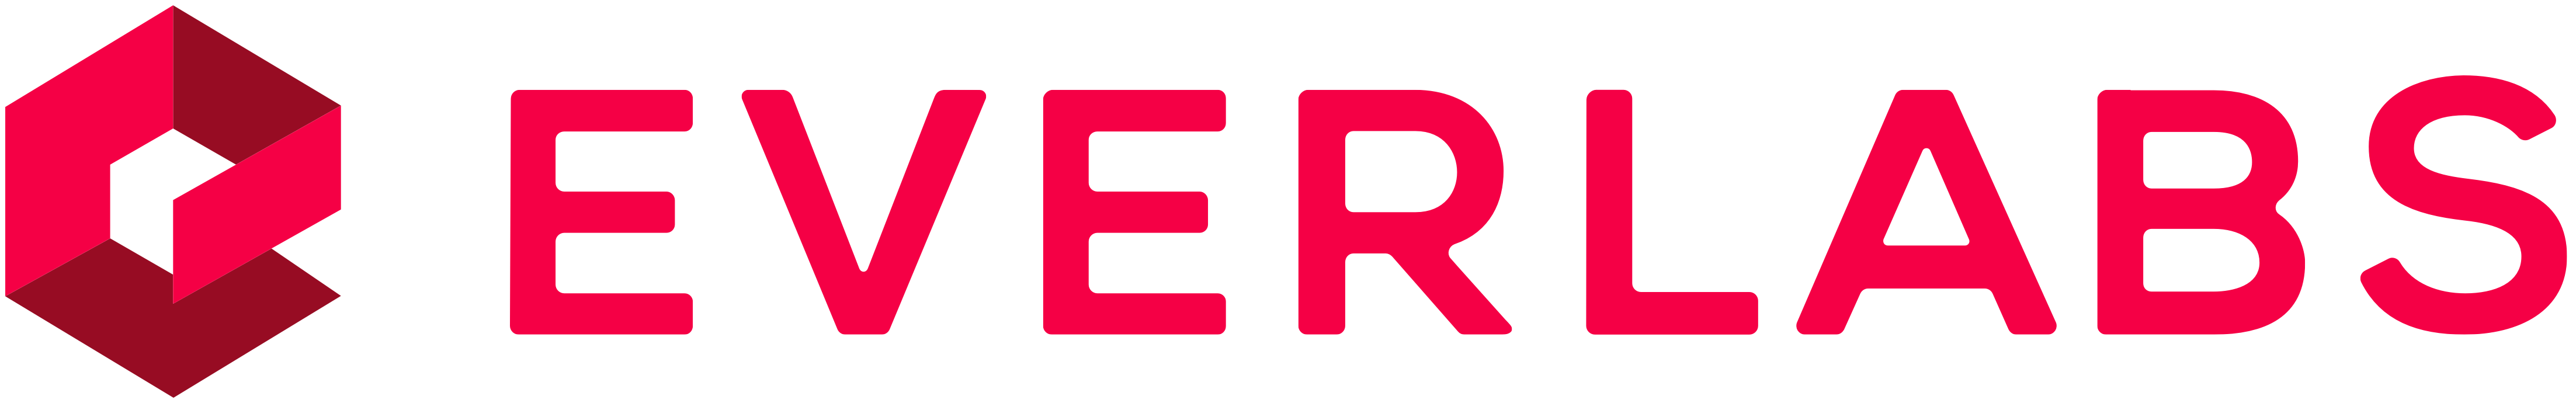 Everlabs logo